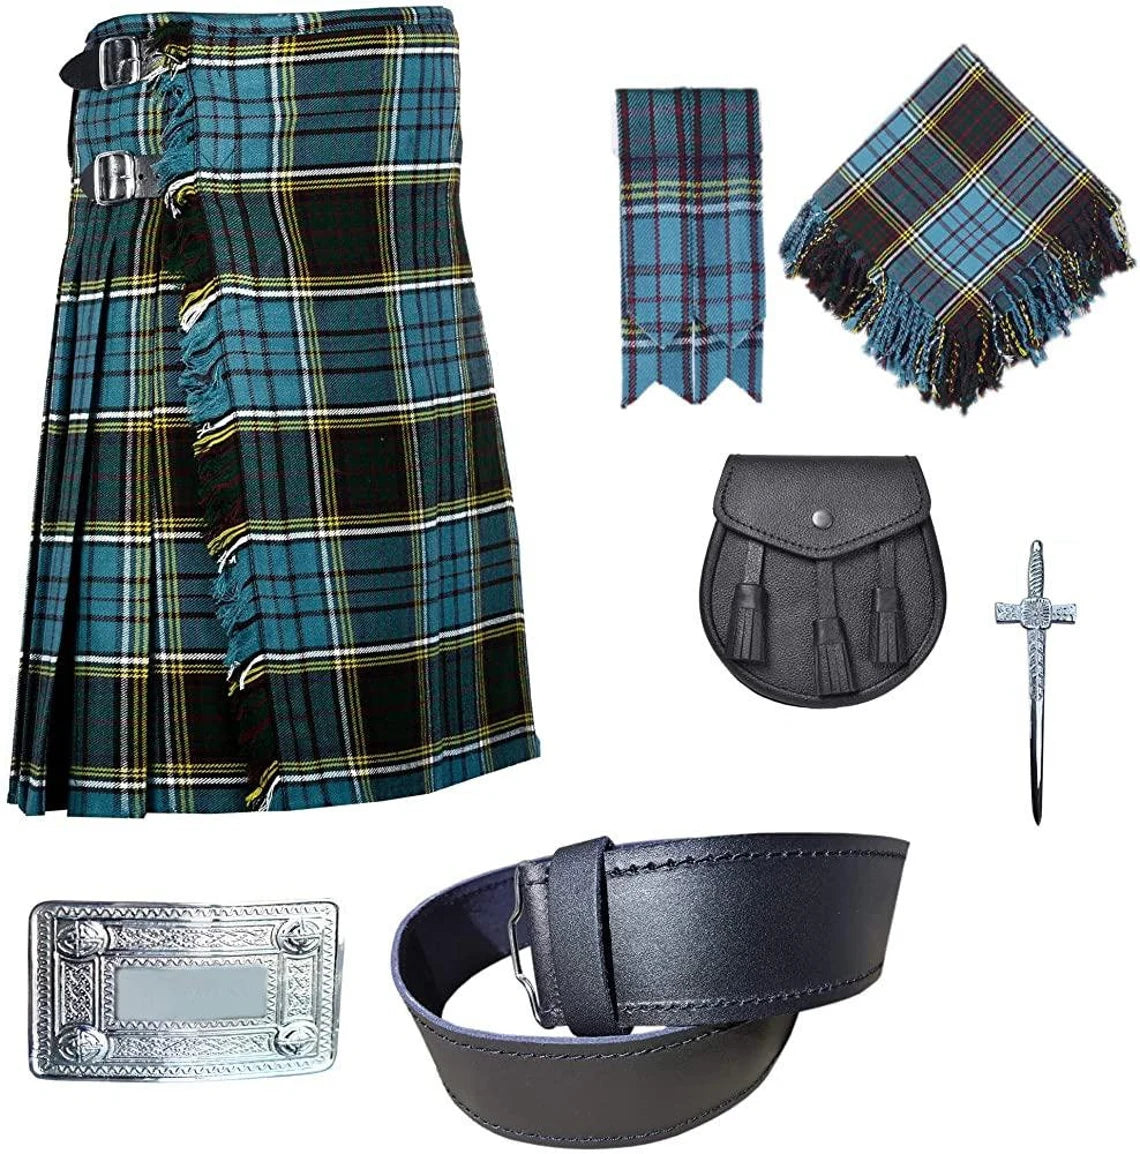 Anderson  8 yard  Scottish Highland 7 Pieces kilt outfit  Kilt, Leather Sporran , Kilt Pin , Tartan Flashes , Fly plaid , Belt Buckle